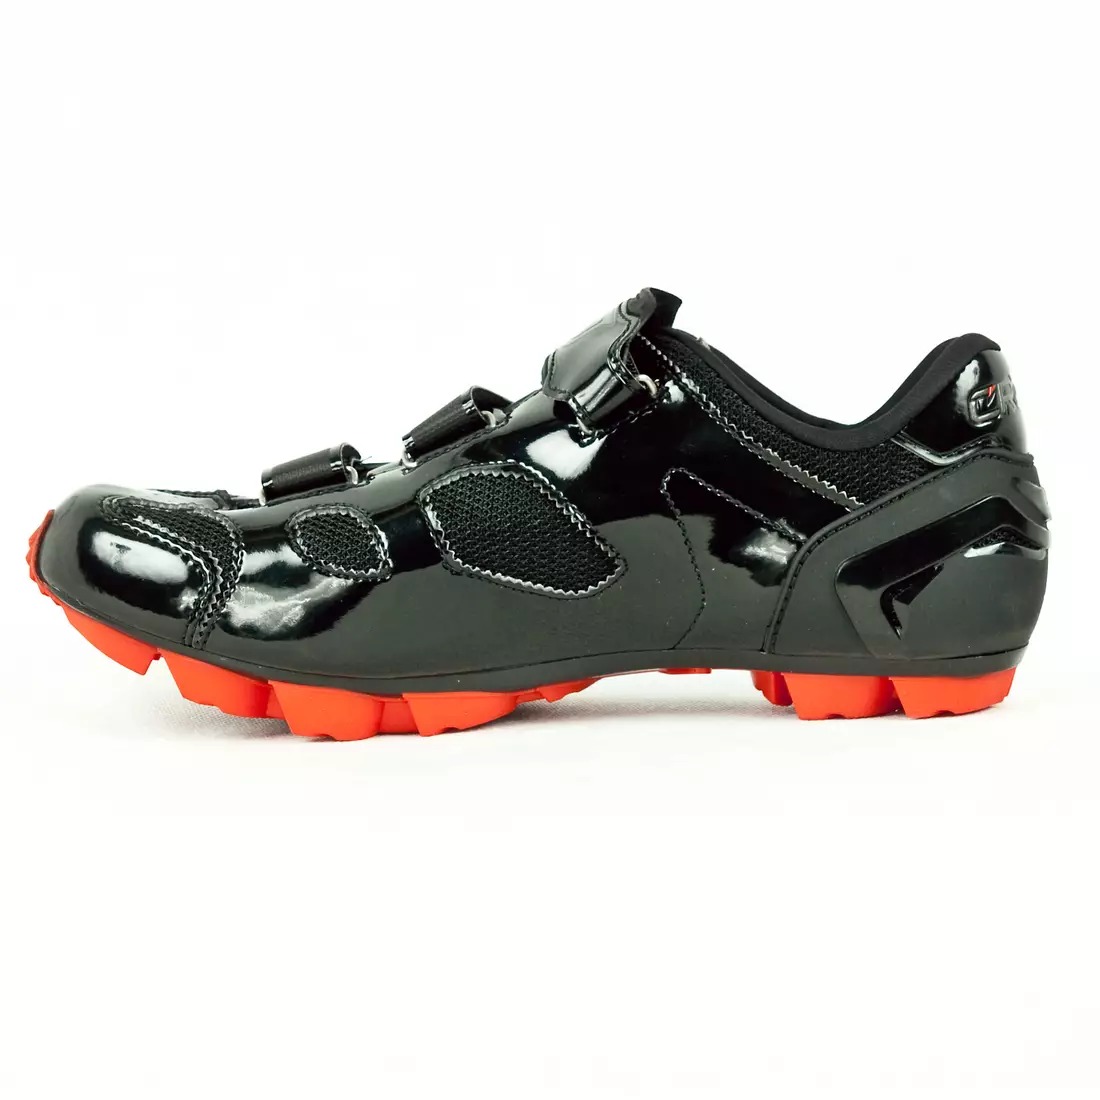 CRONO TRACK - MTB cycling shoes - color: Black